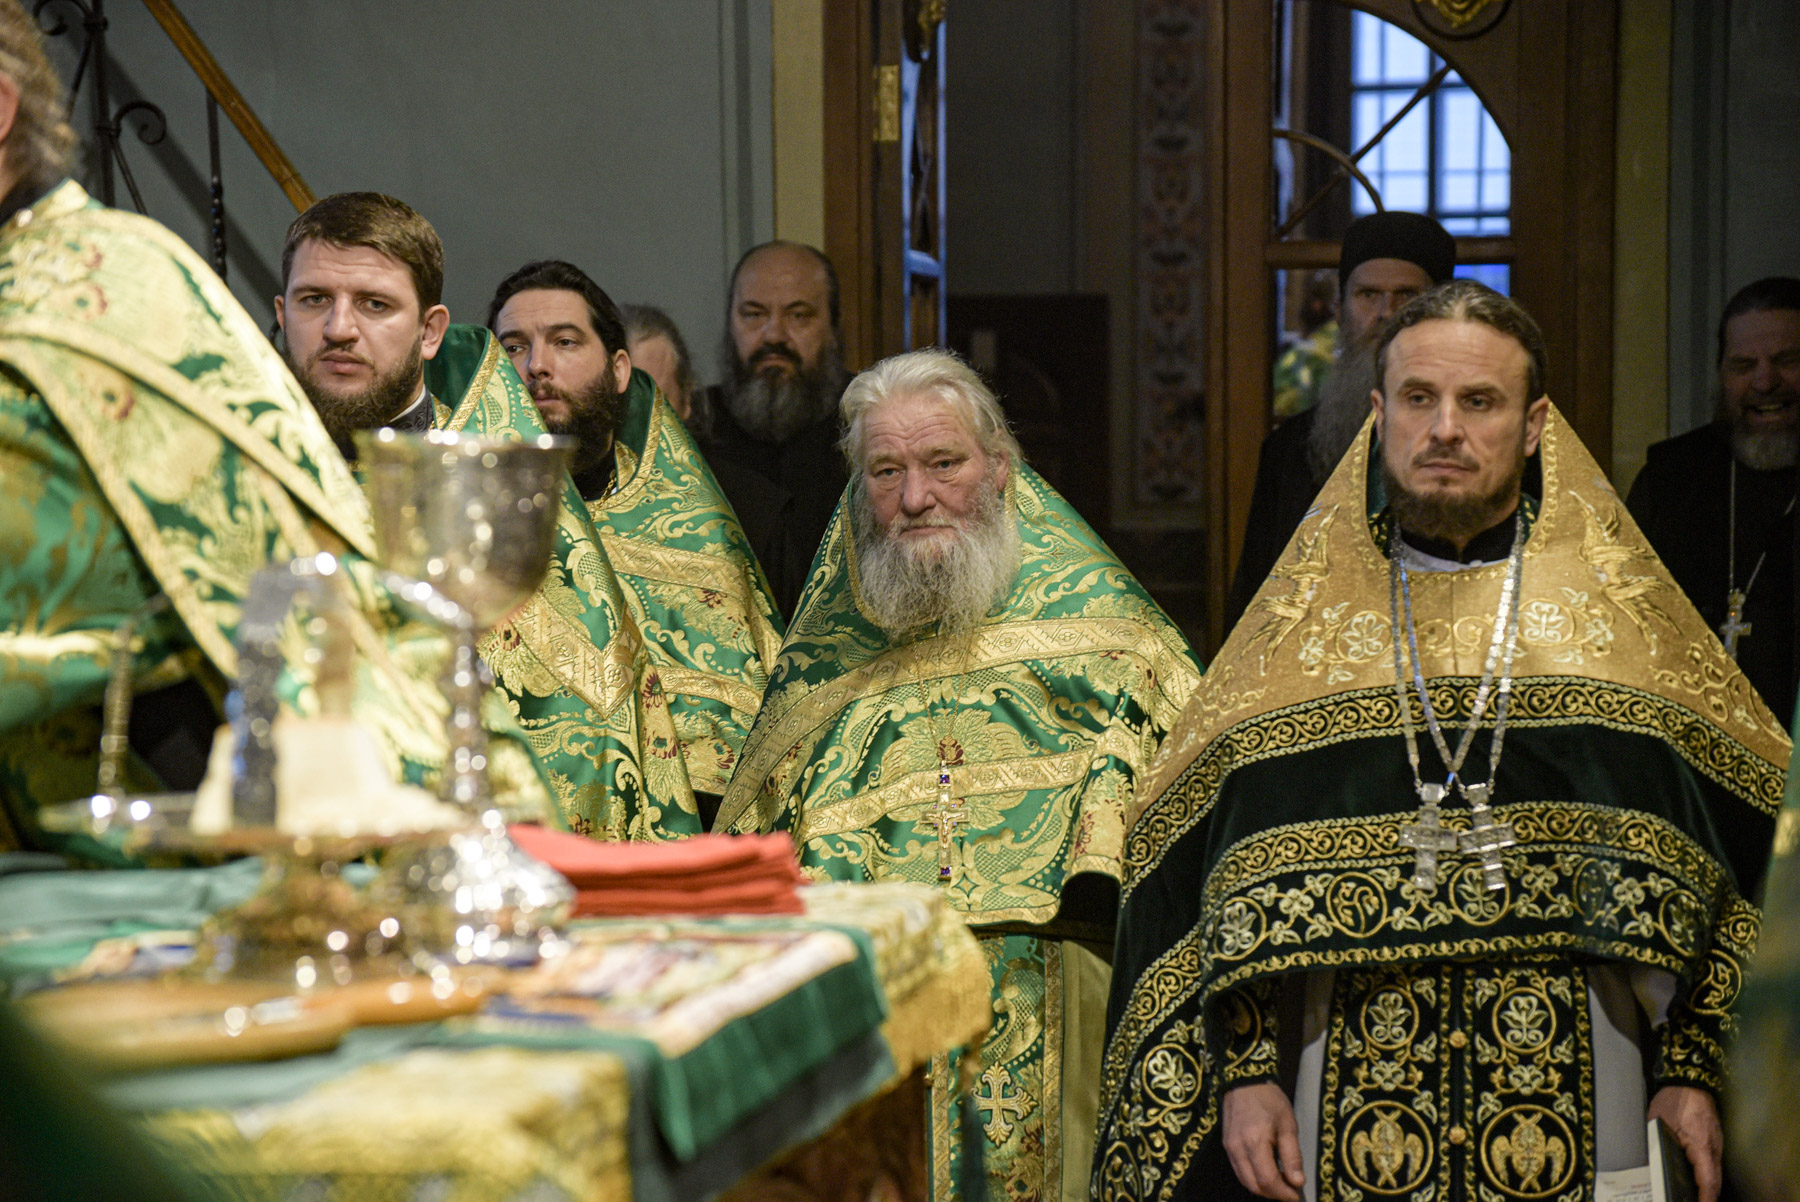 photos of orthodox christmas 0189 2